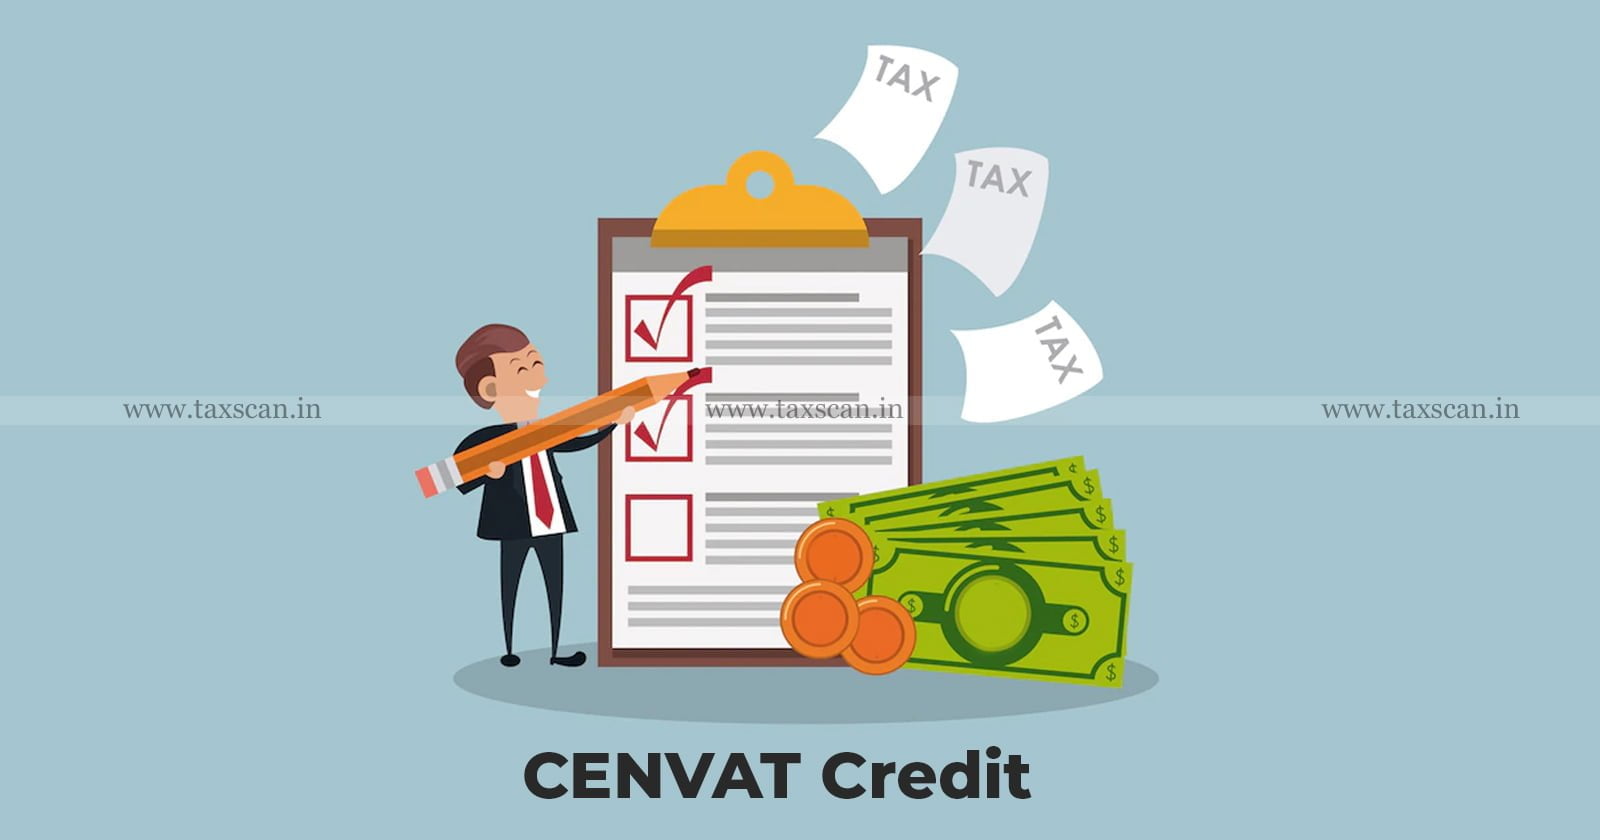 CESTAT - CESTAT Mumbai - CCR - Cenvat Credit Rules - Cenvat Credit Reversal - taxscan